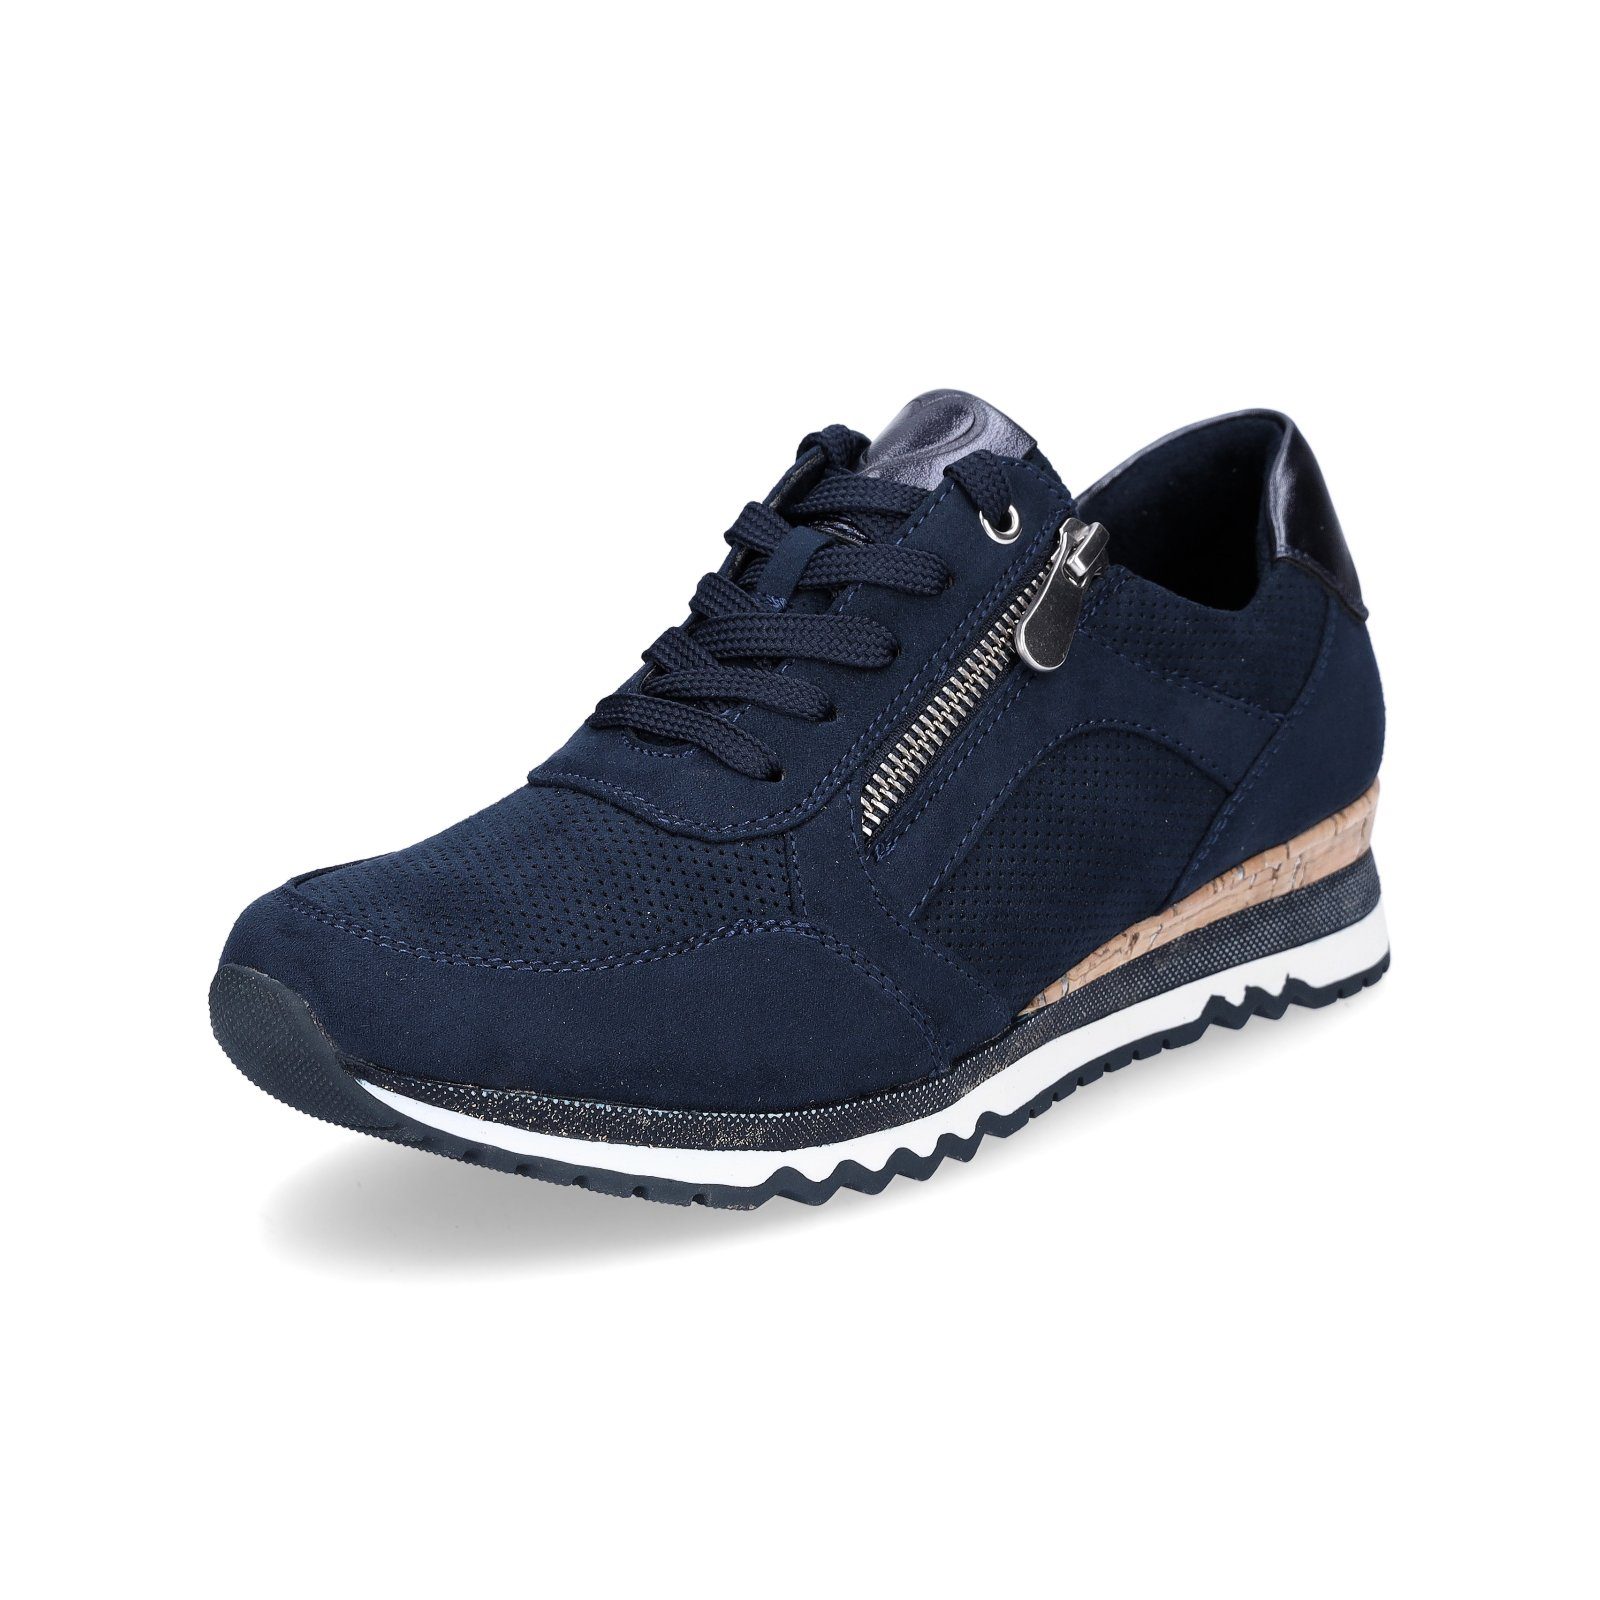 MARCO TOZZI Marco Tozzi Sneaker COMB Damen navy NAVY Sneaker blau 890